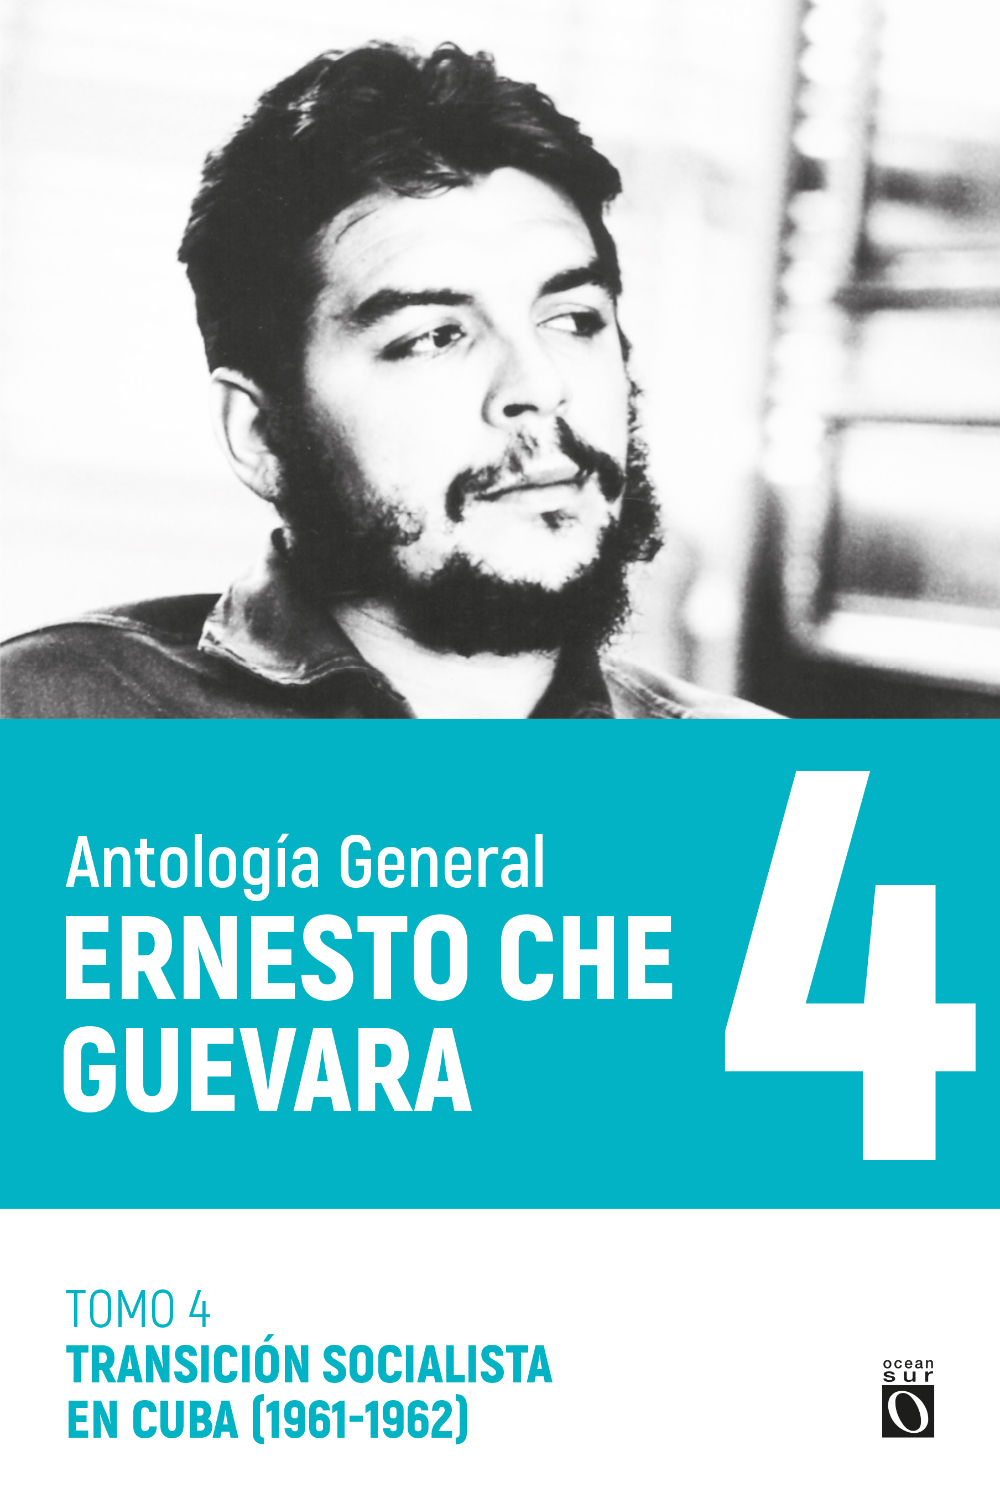 TOMO 4 TRANSICIÓN SOCIALISTA  EN CUBA (1961-1962)